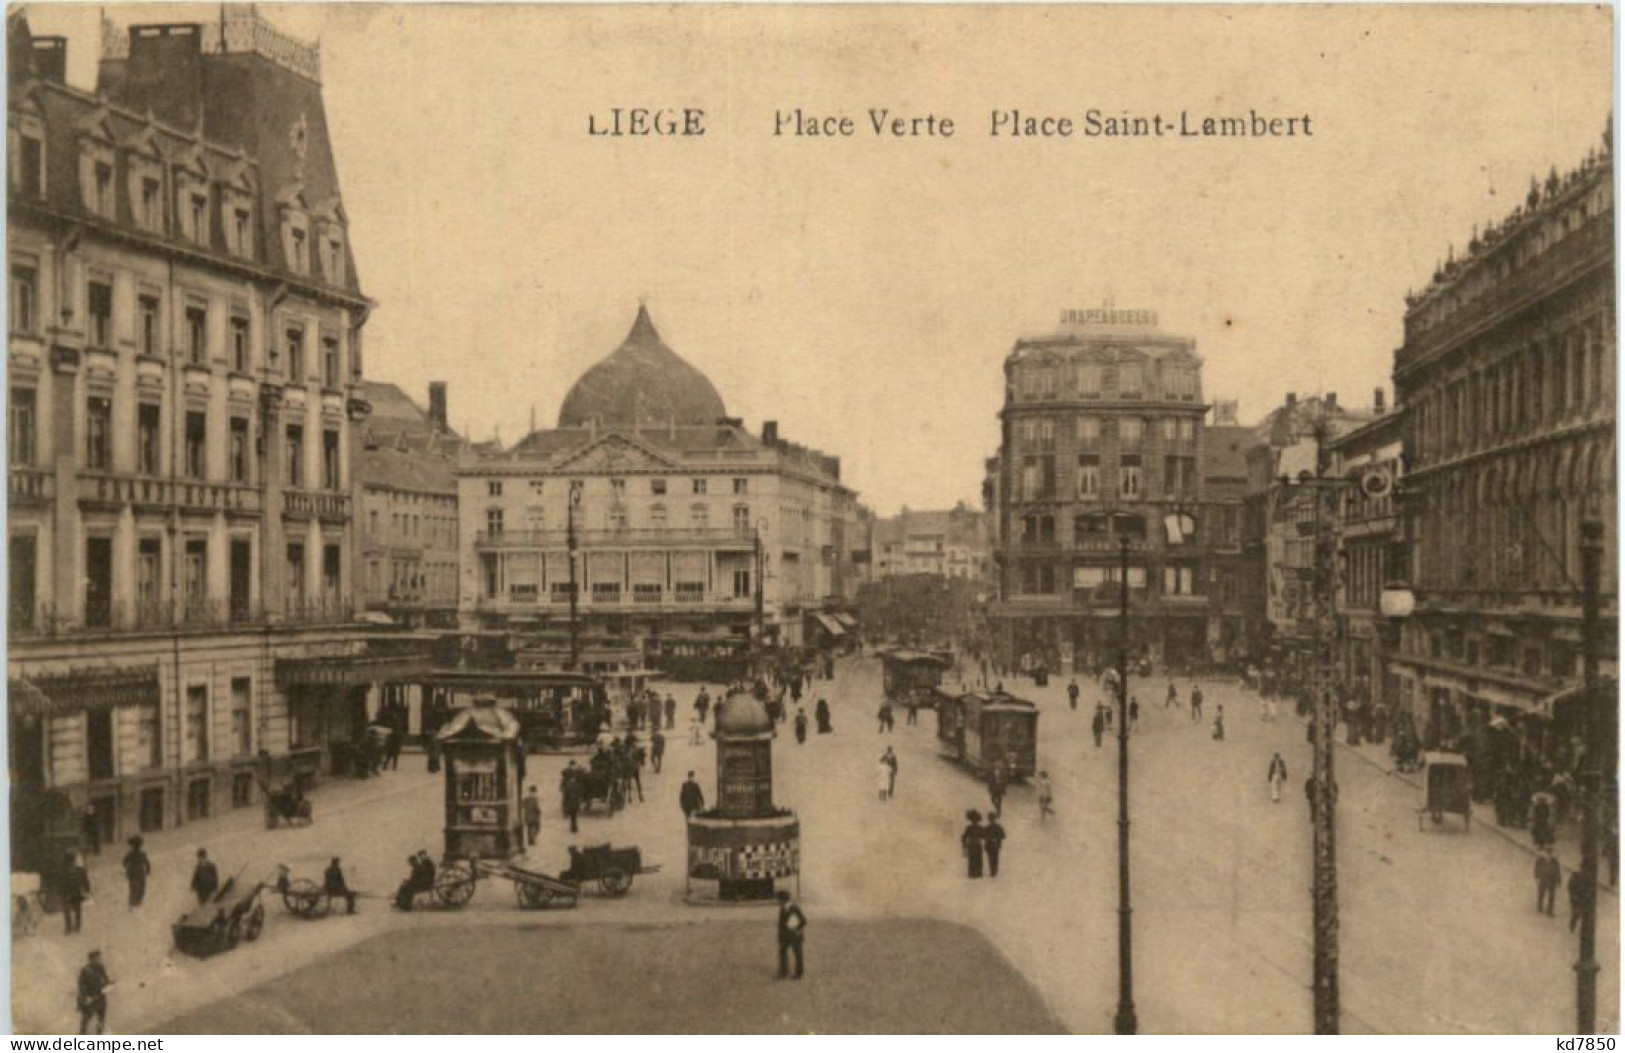 Liege - Place Verte - Luik